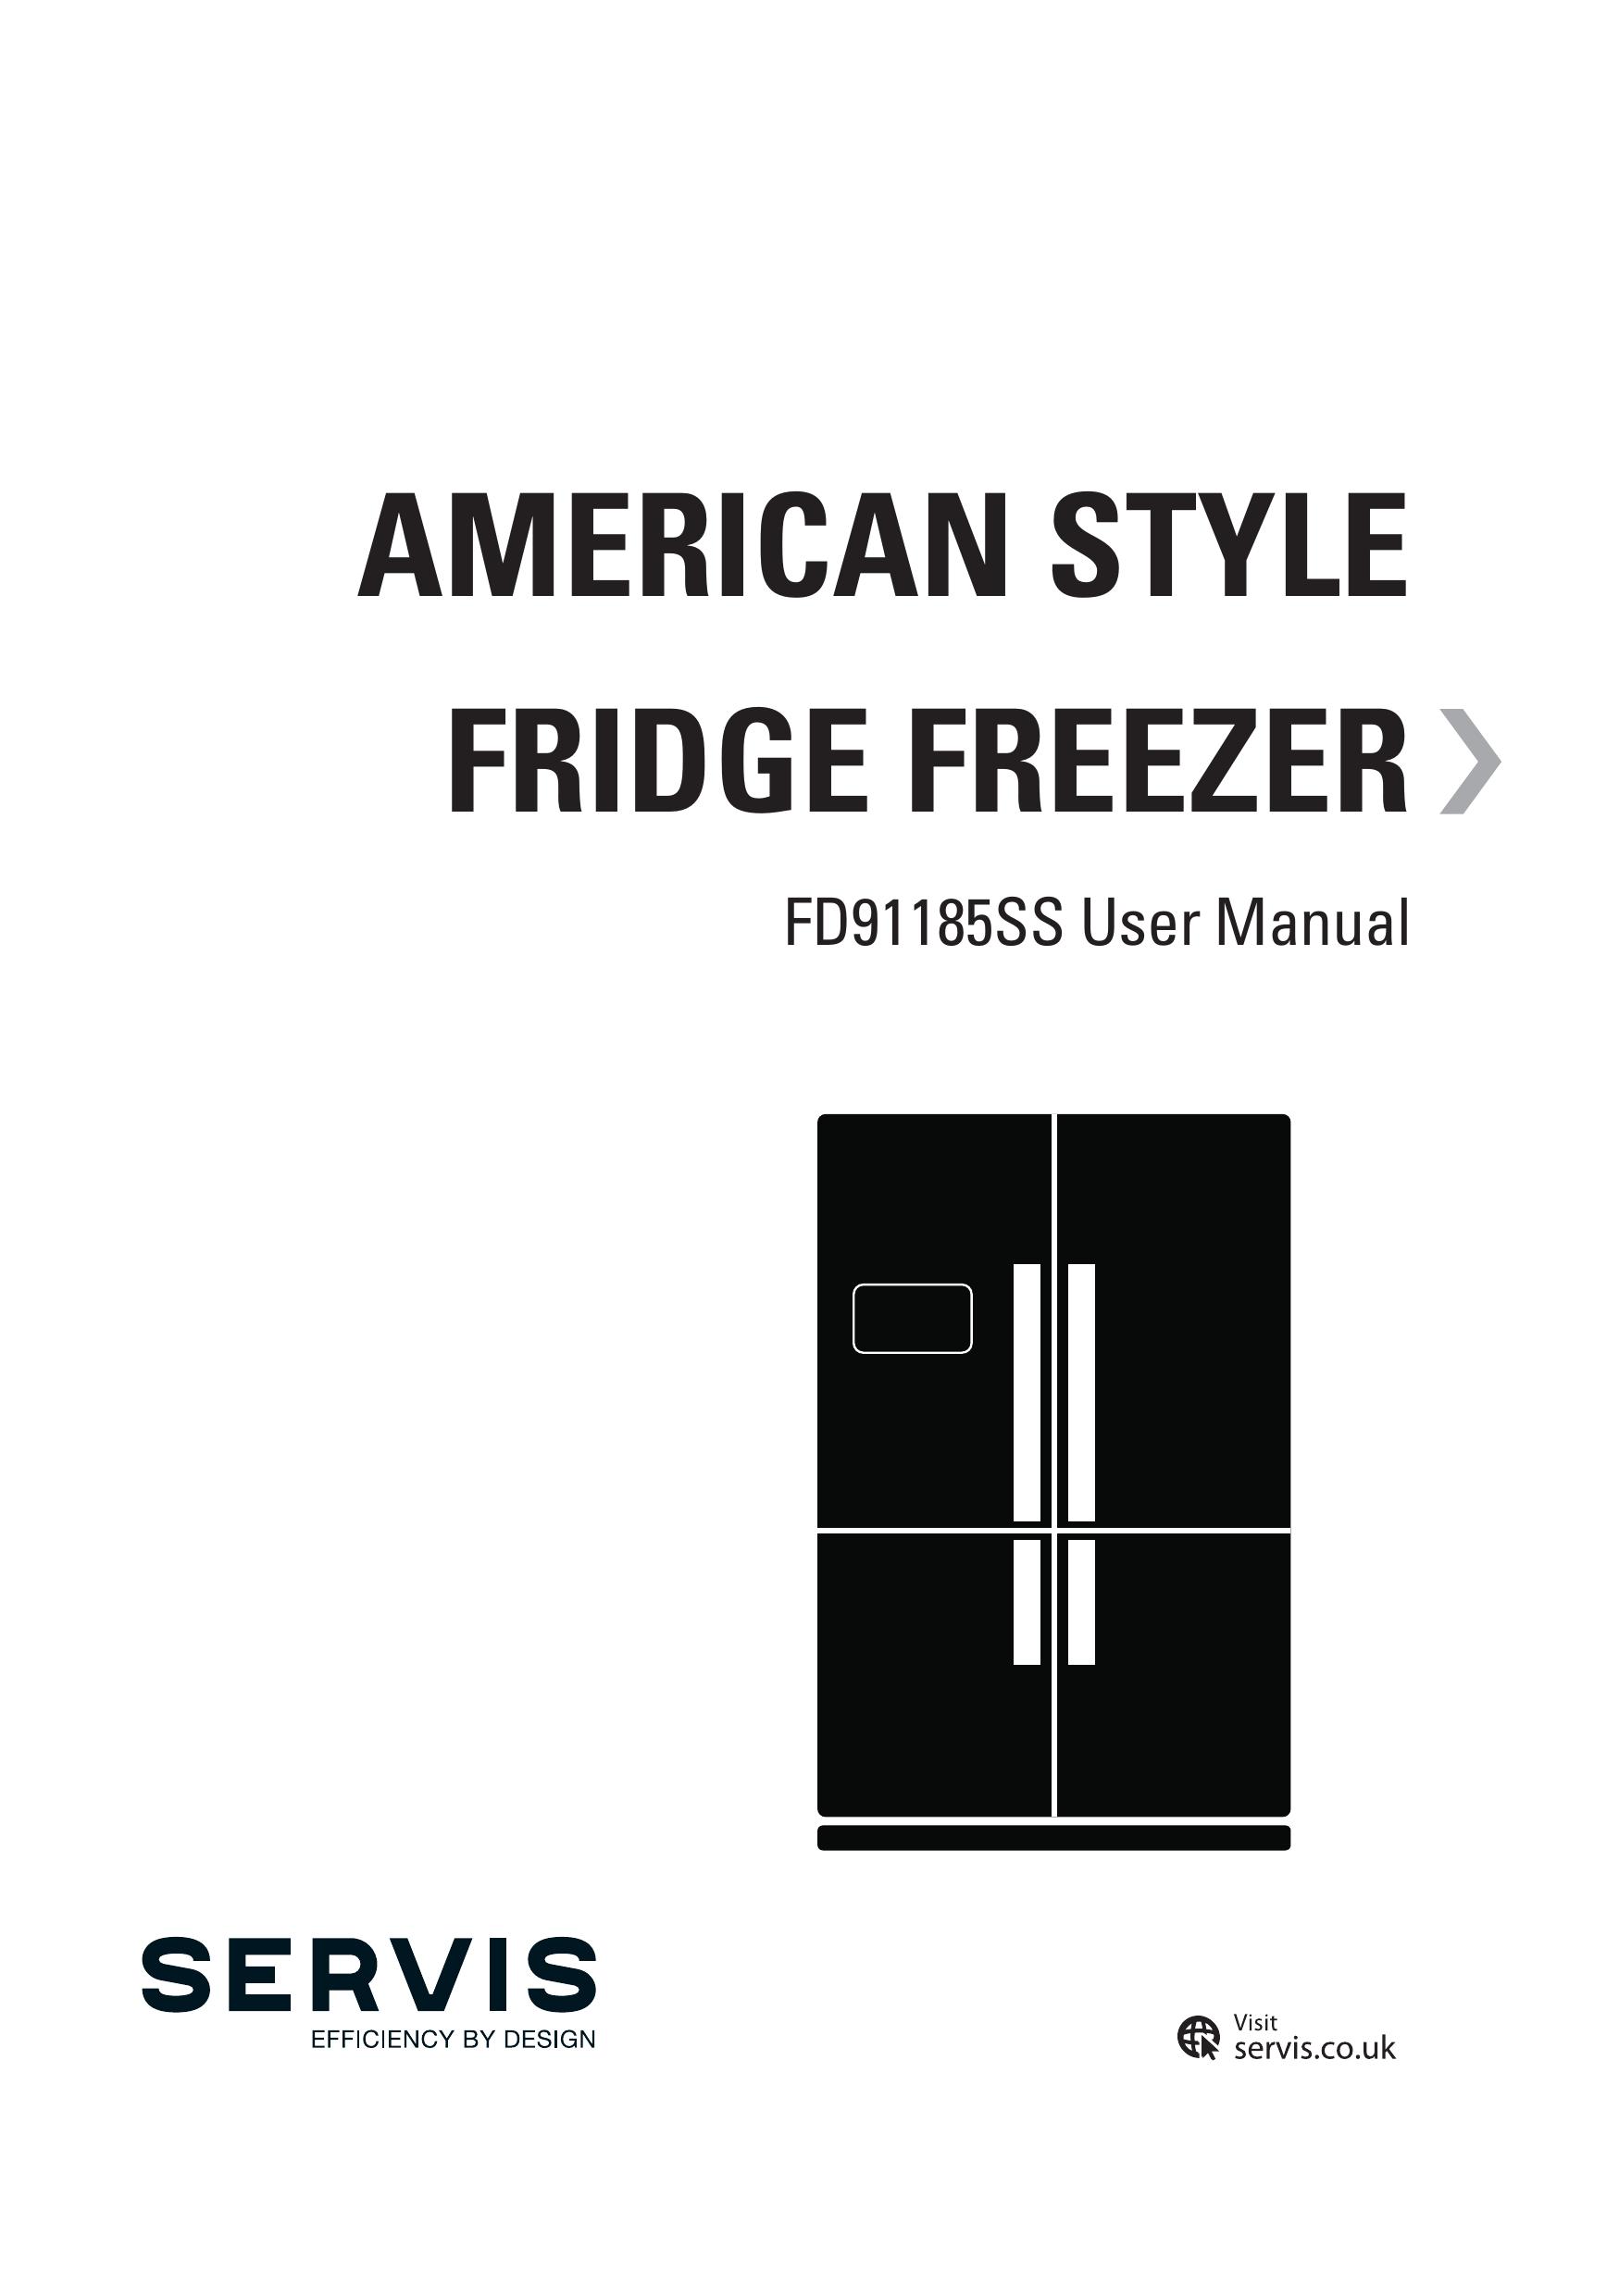 Servis AMERICAN STYLE FRIDGE FREEZER Refrigerator User Manual